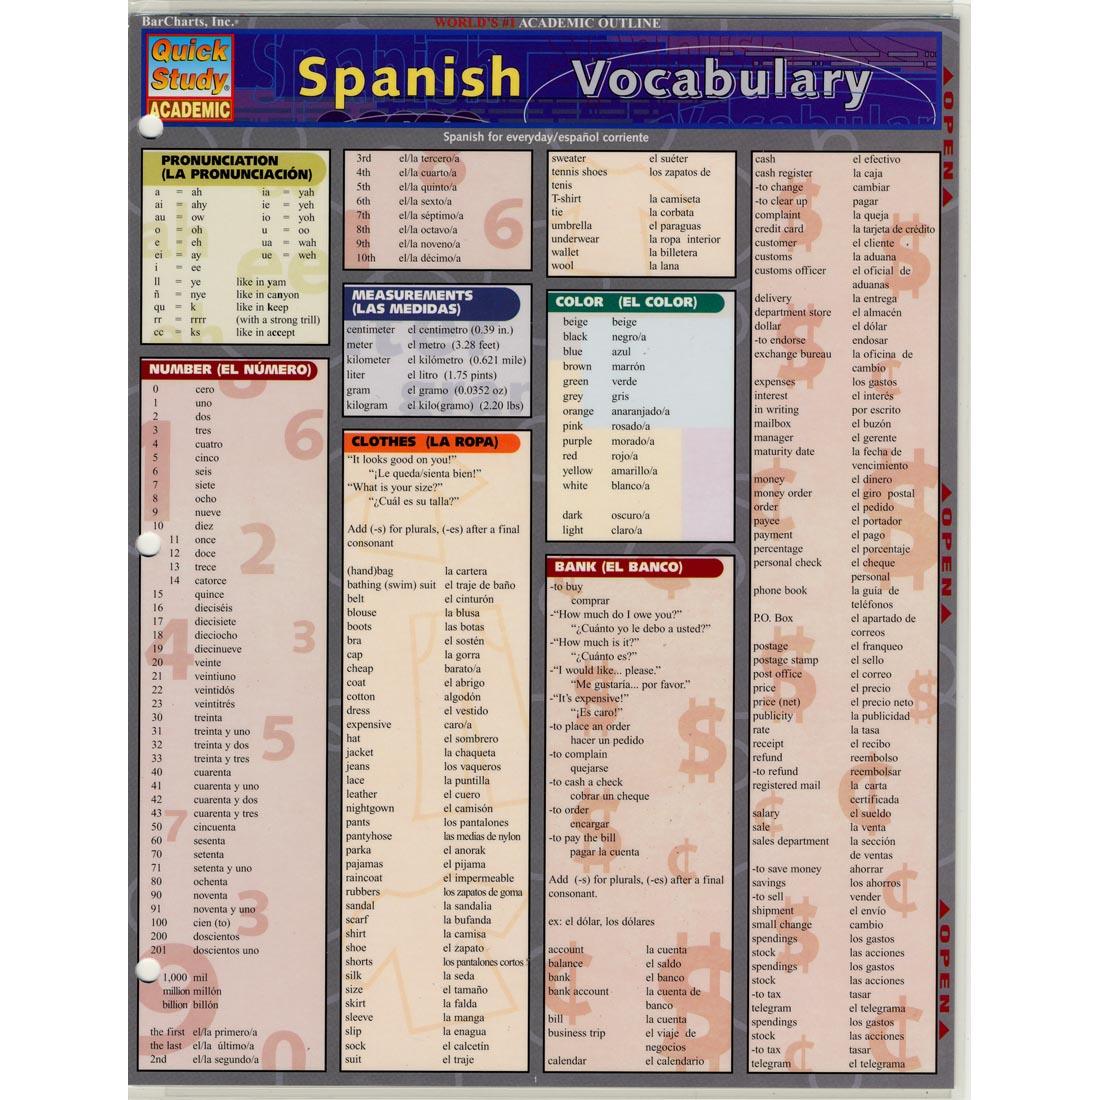 Spanish Vocabulary Study Guide